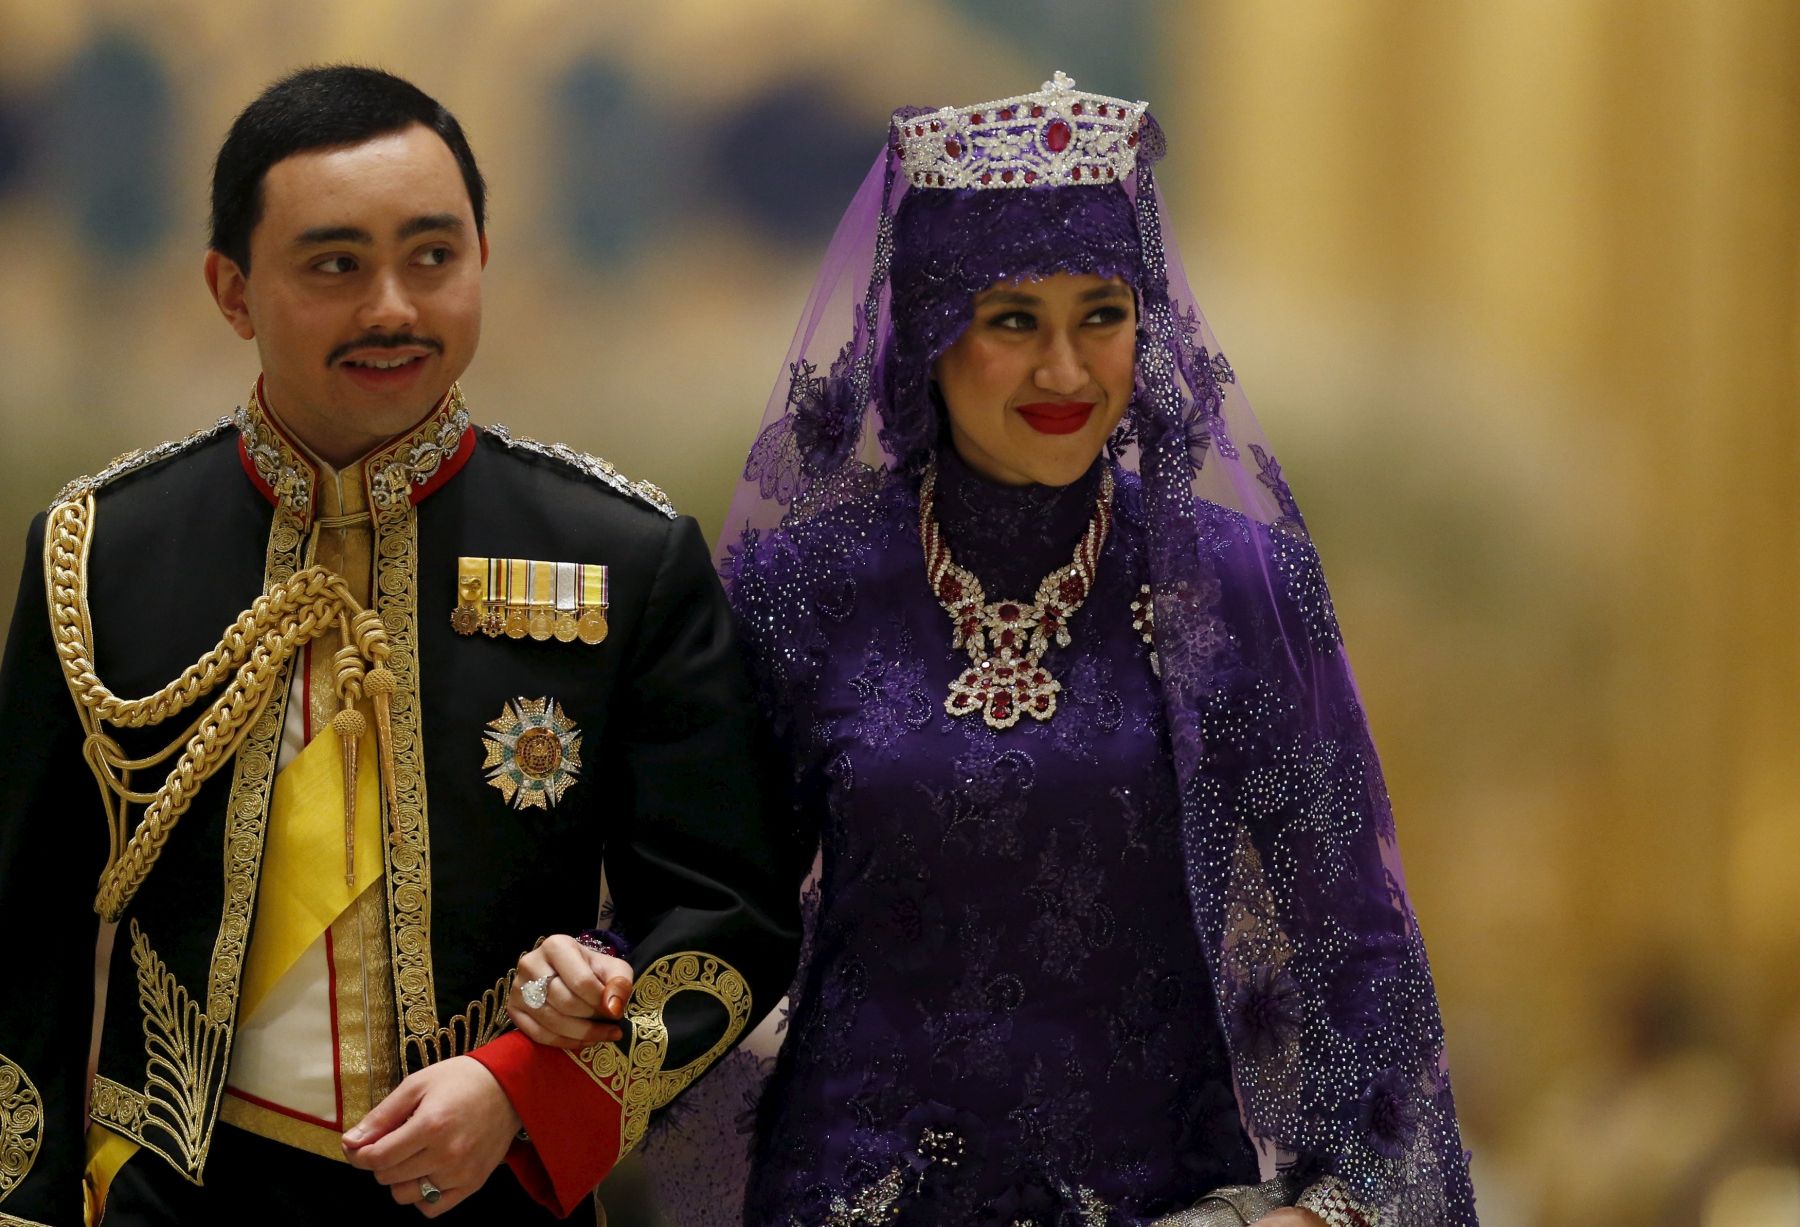 Wedding News: Sultan of Brunei's Son Celebrates Wedding